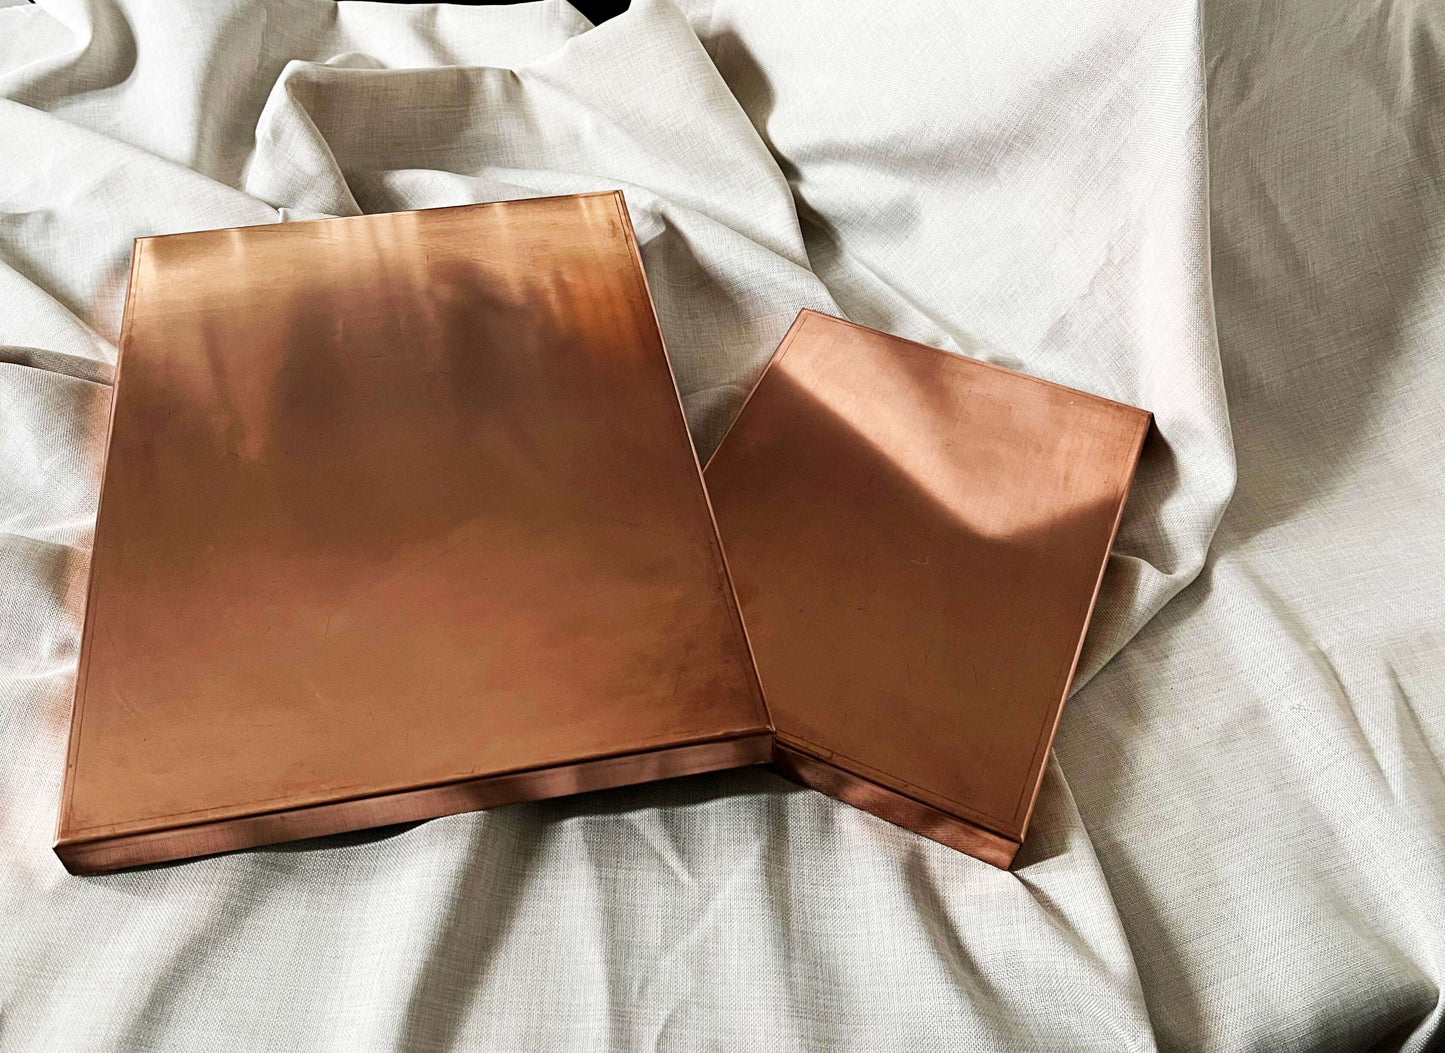 Copper Baking Sheet - Quarter-Sheet